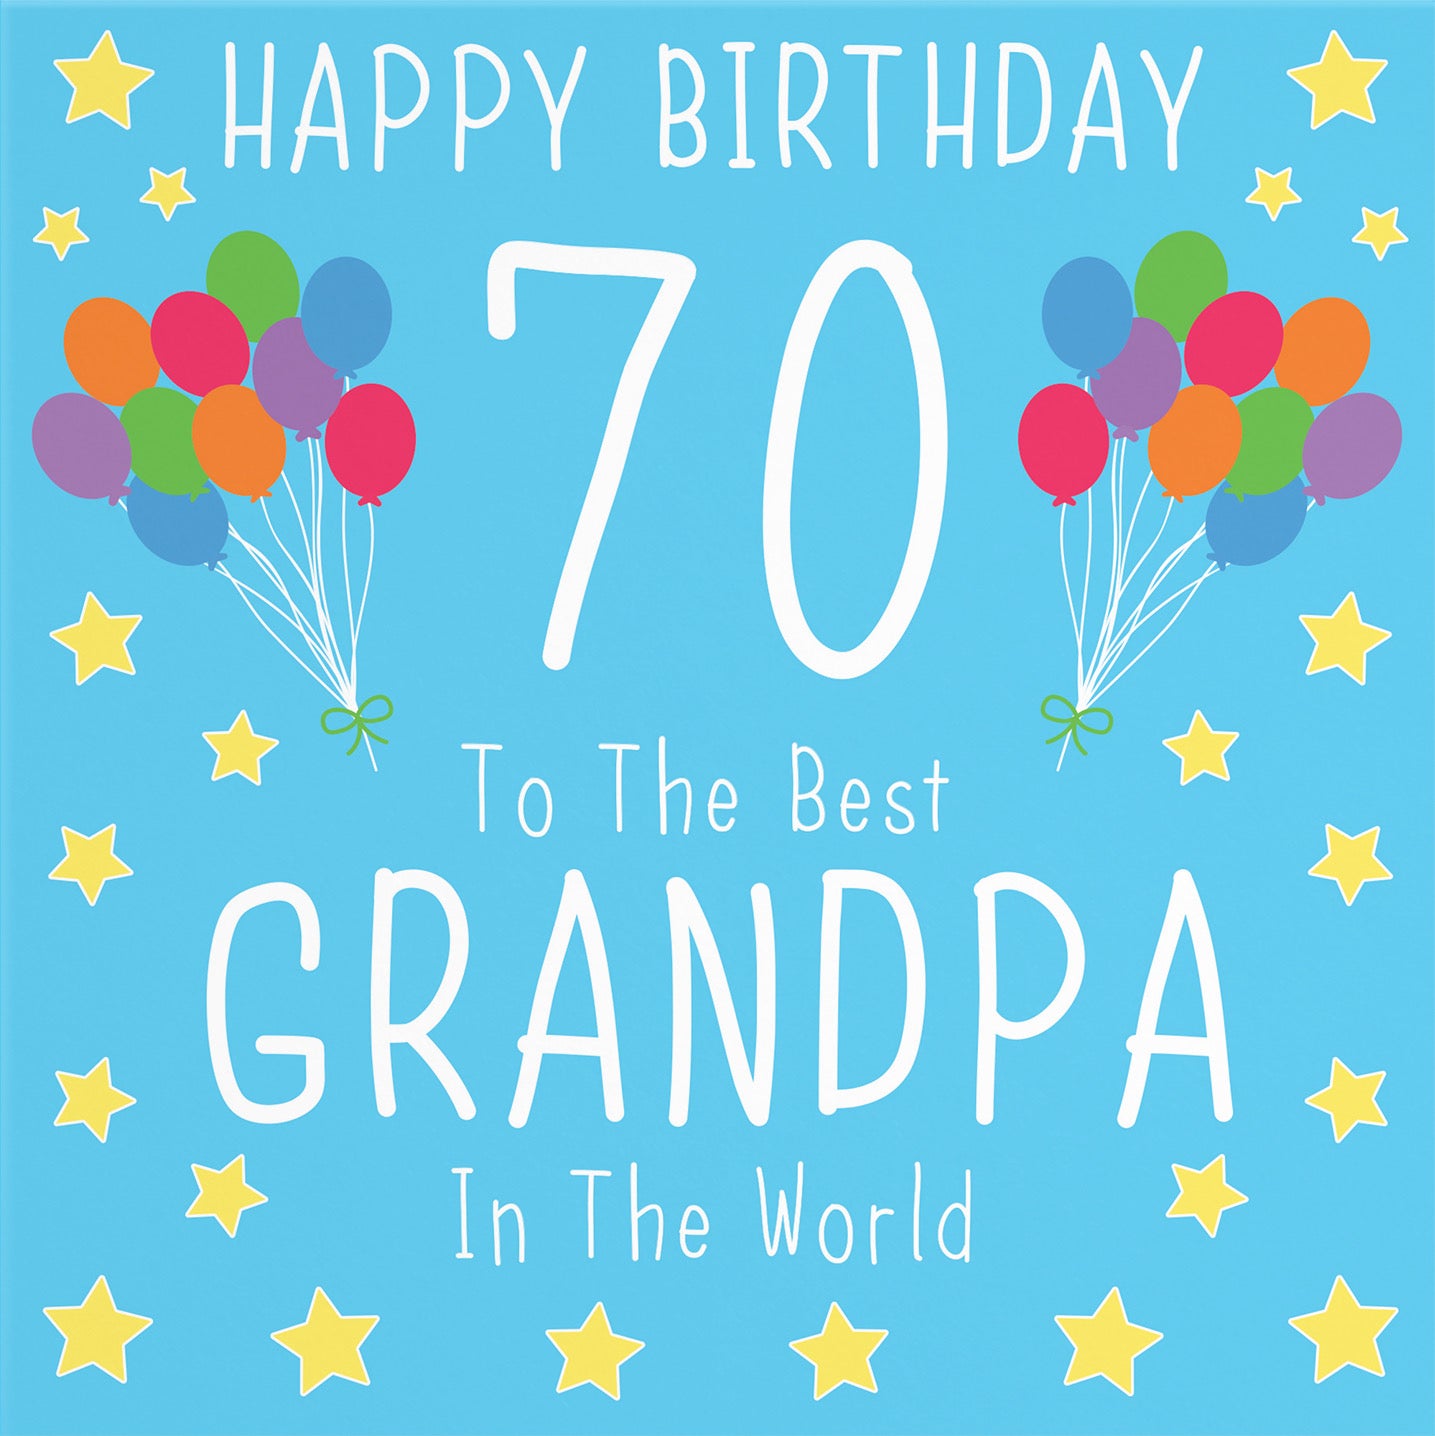 70th Grandpa Birthday Card Iconic - Default Title (B09Q7GT17R)